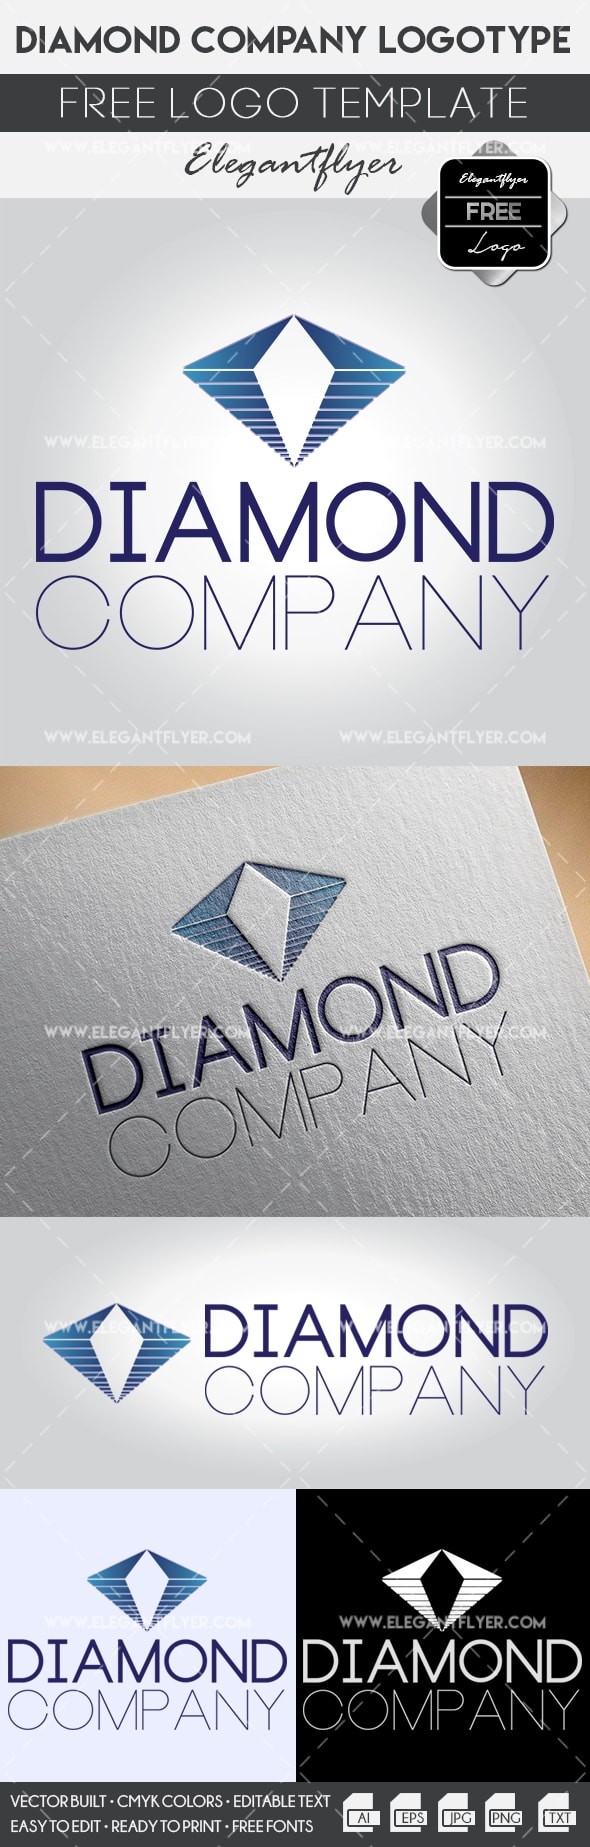 Diamond Company by ElegantFlyer